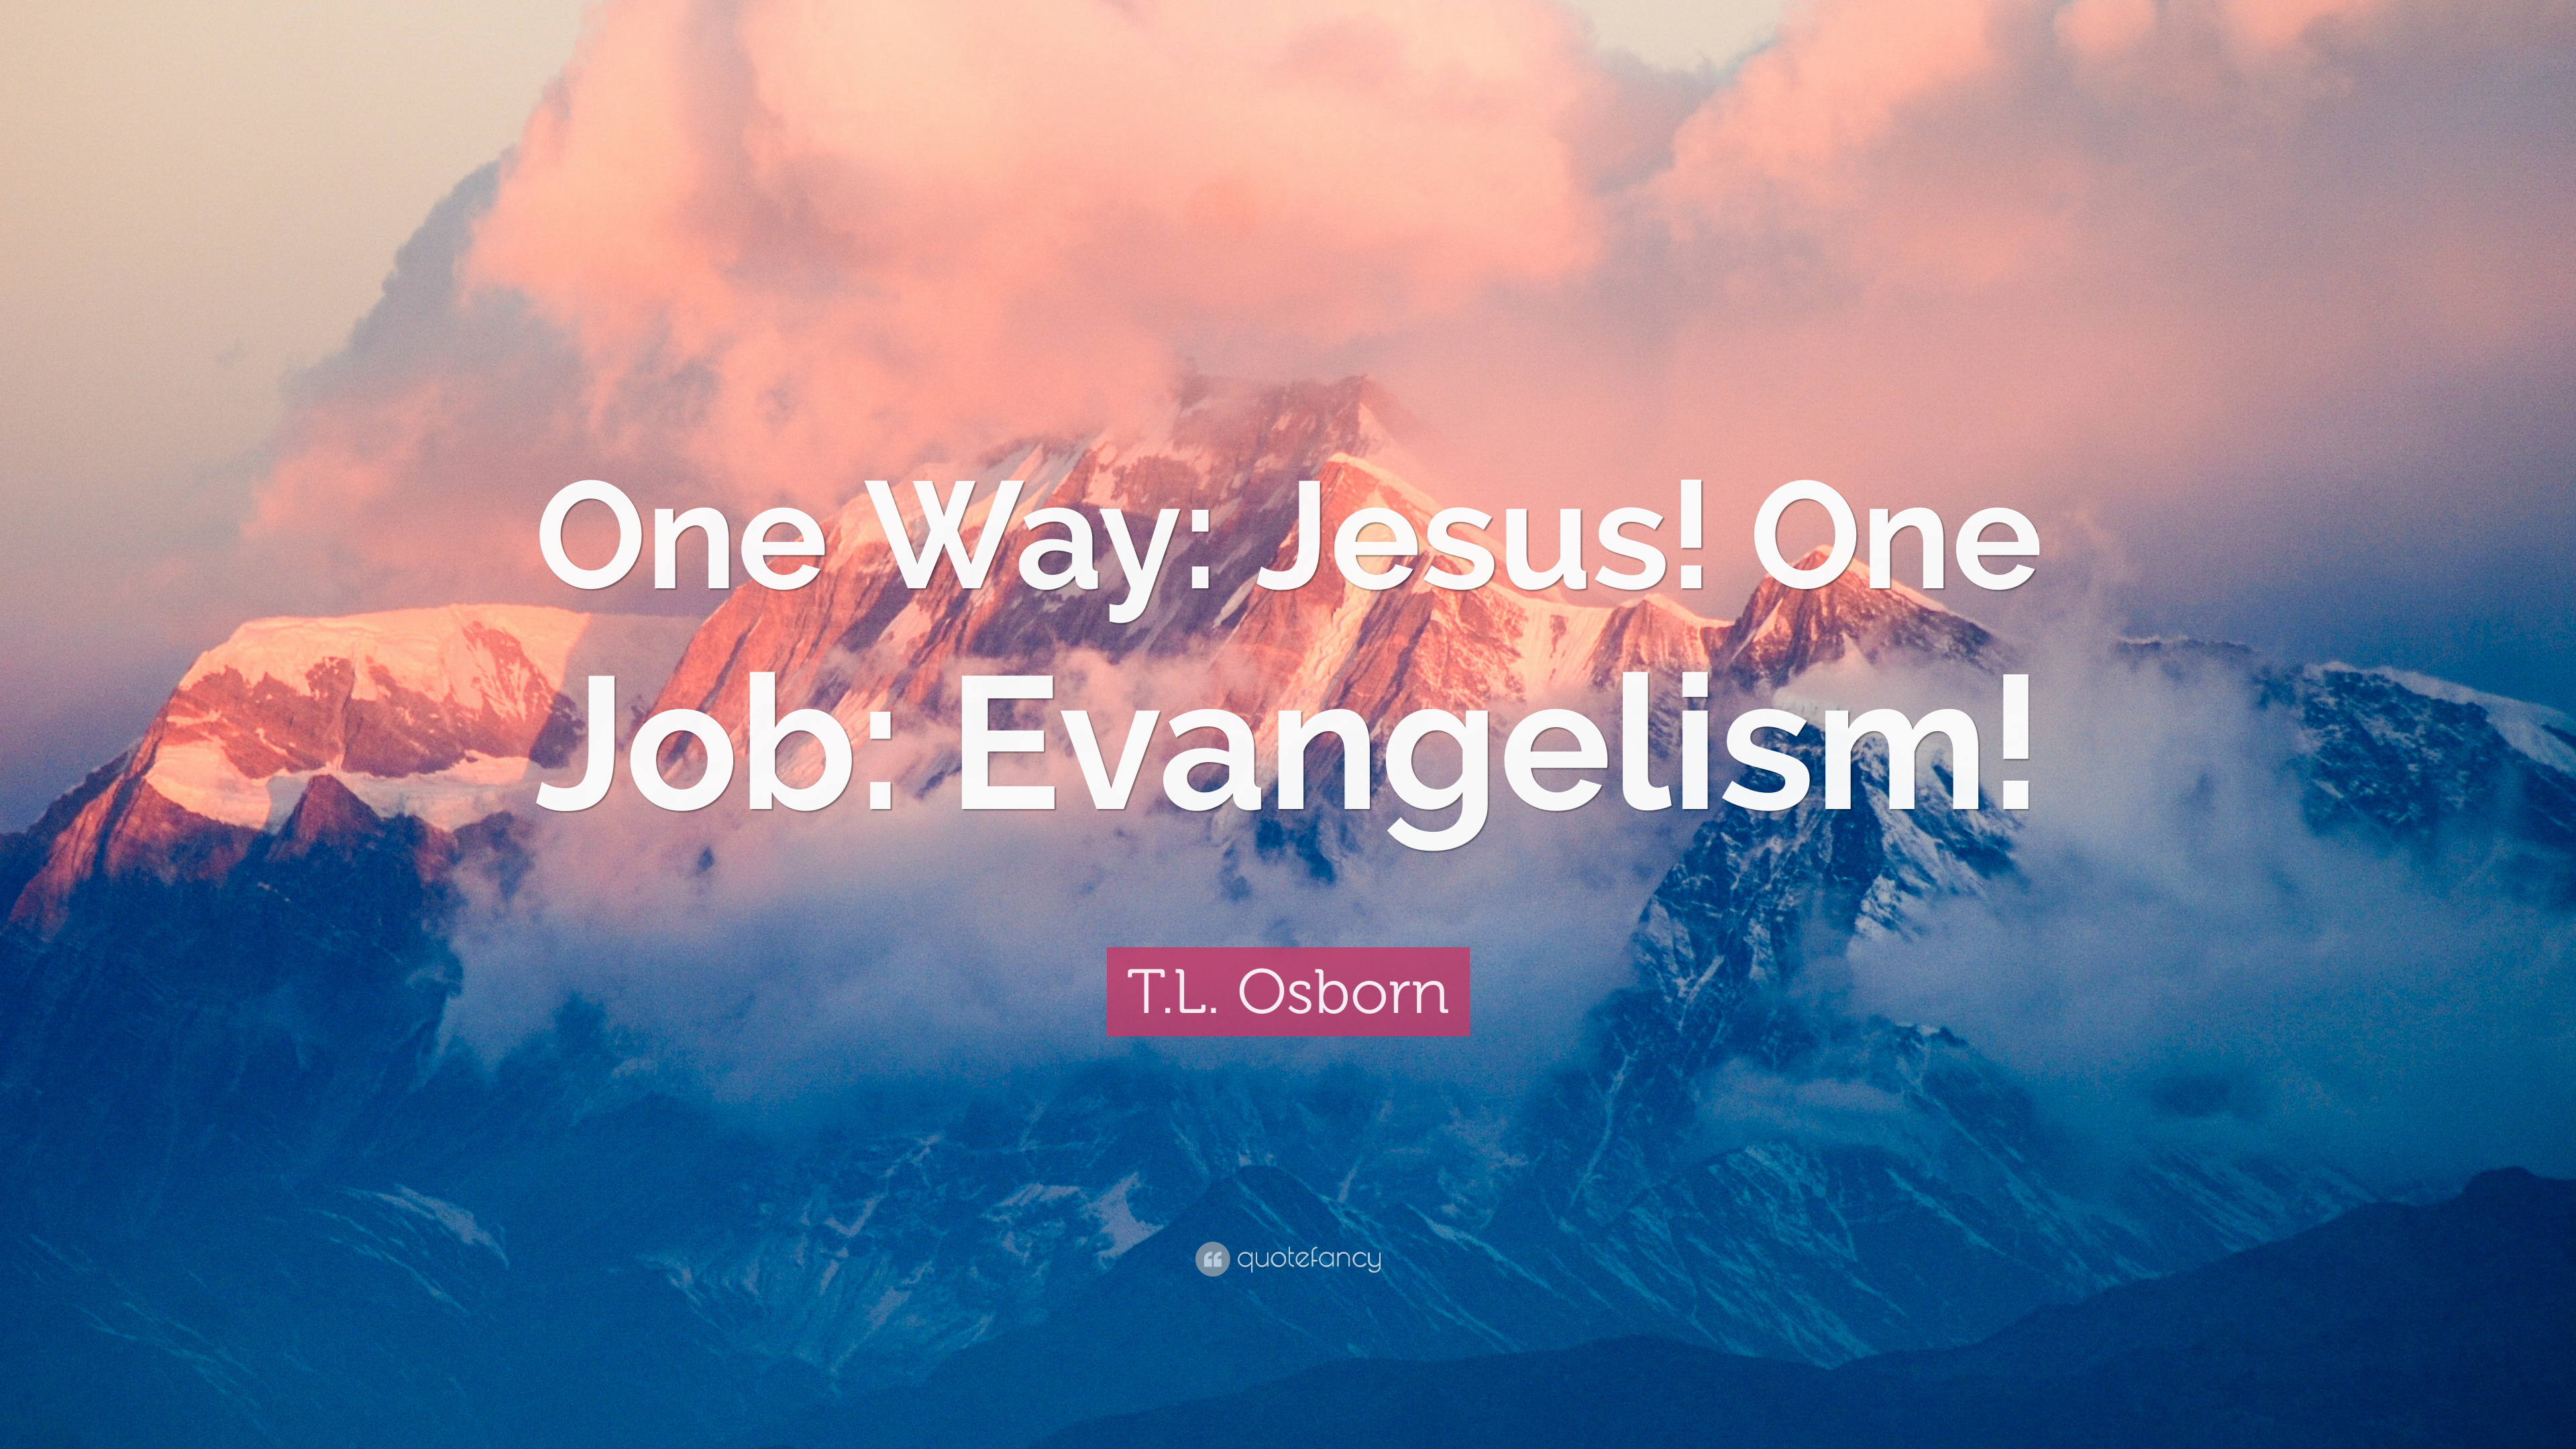 T.L. Osborn Quote: “One Way: Jesus! One Job: Evangelism!”